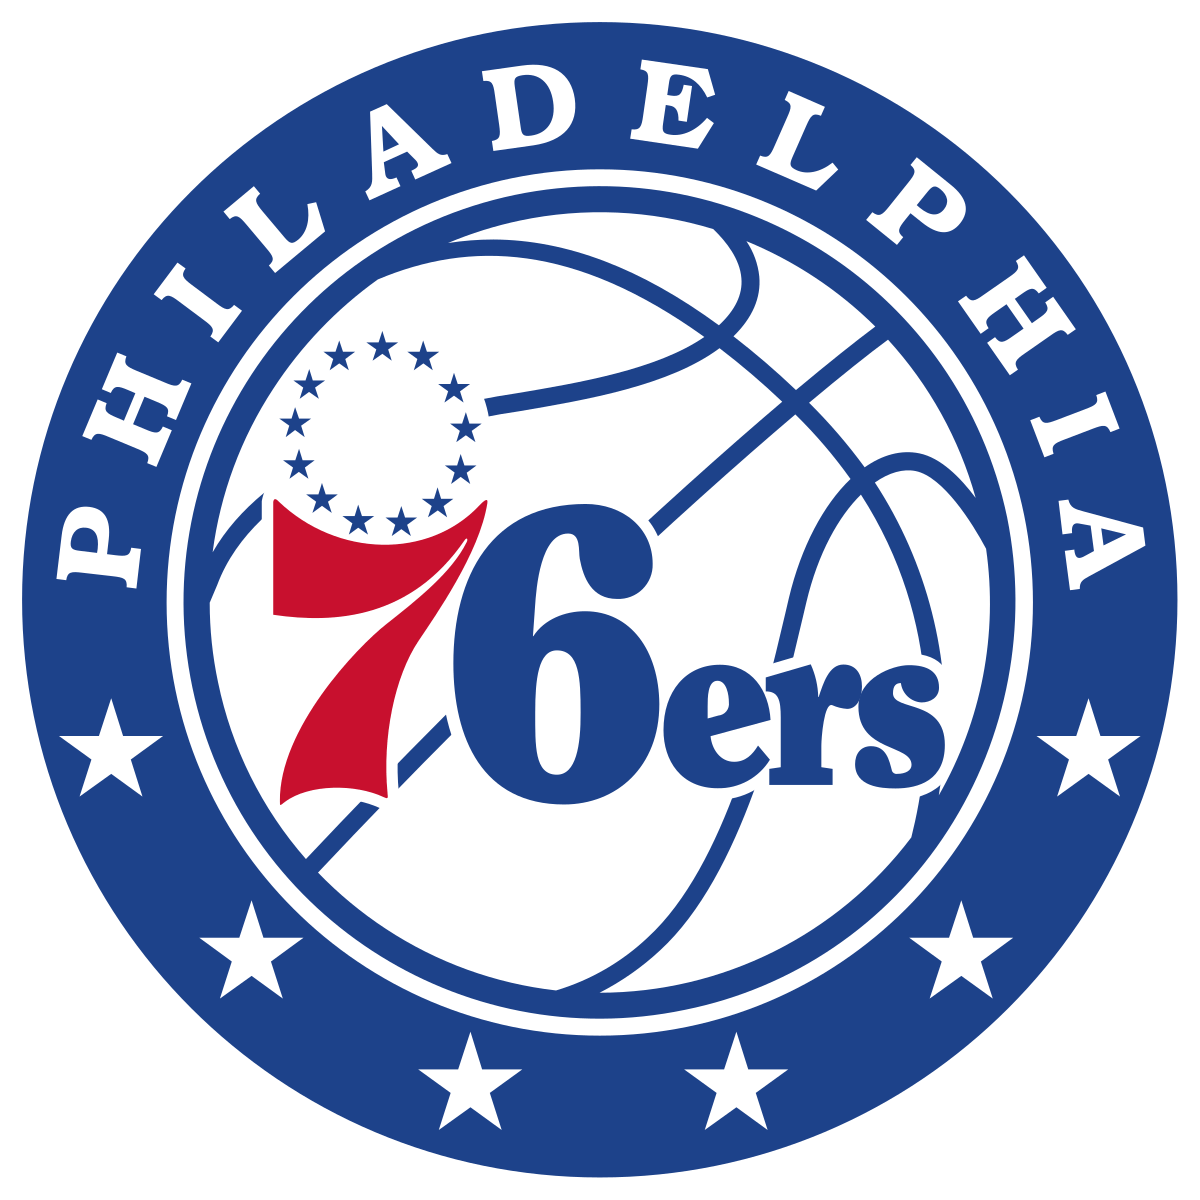 Imagine Philadelphia 76ers